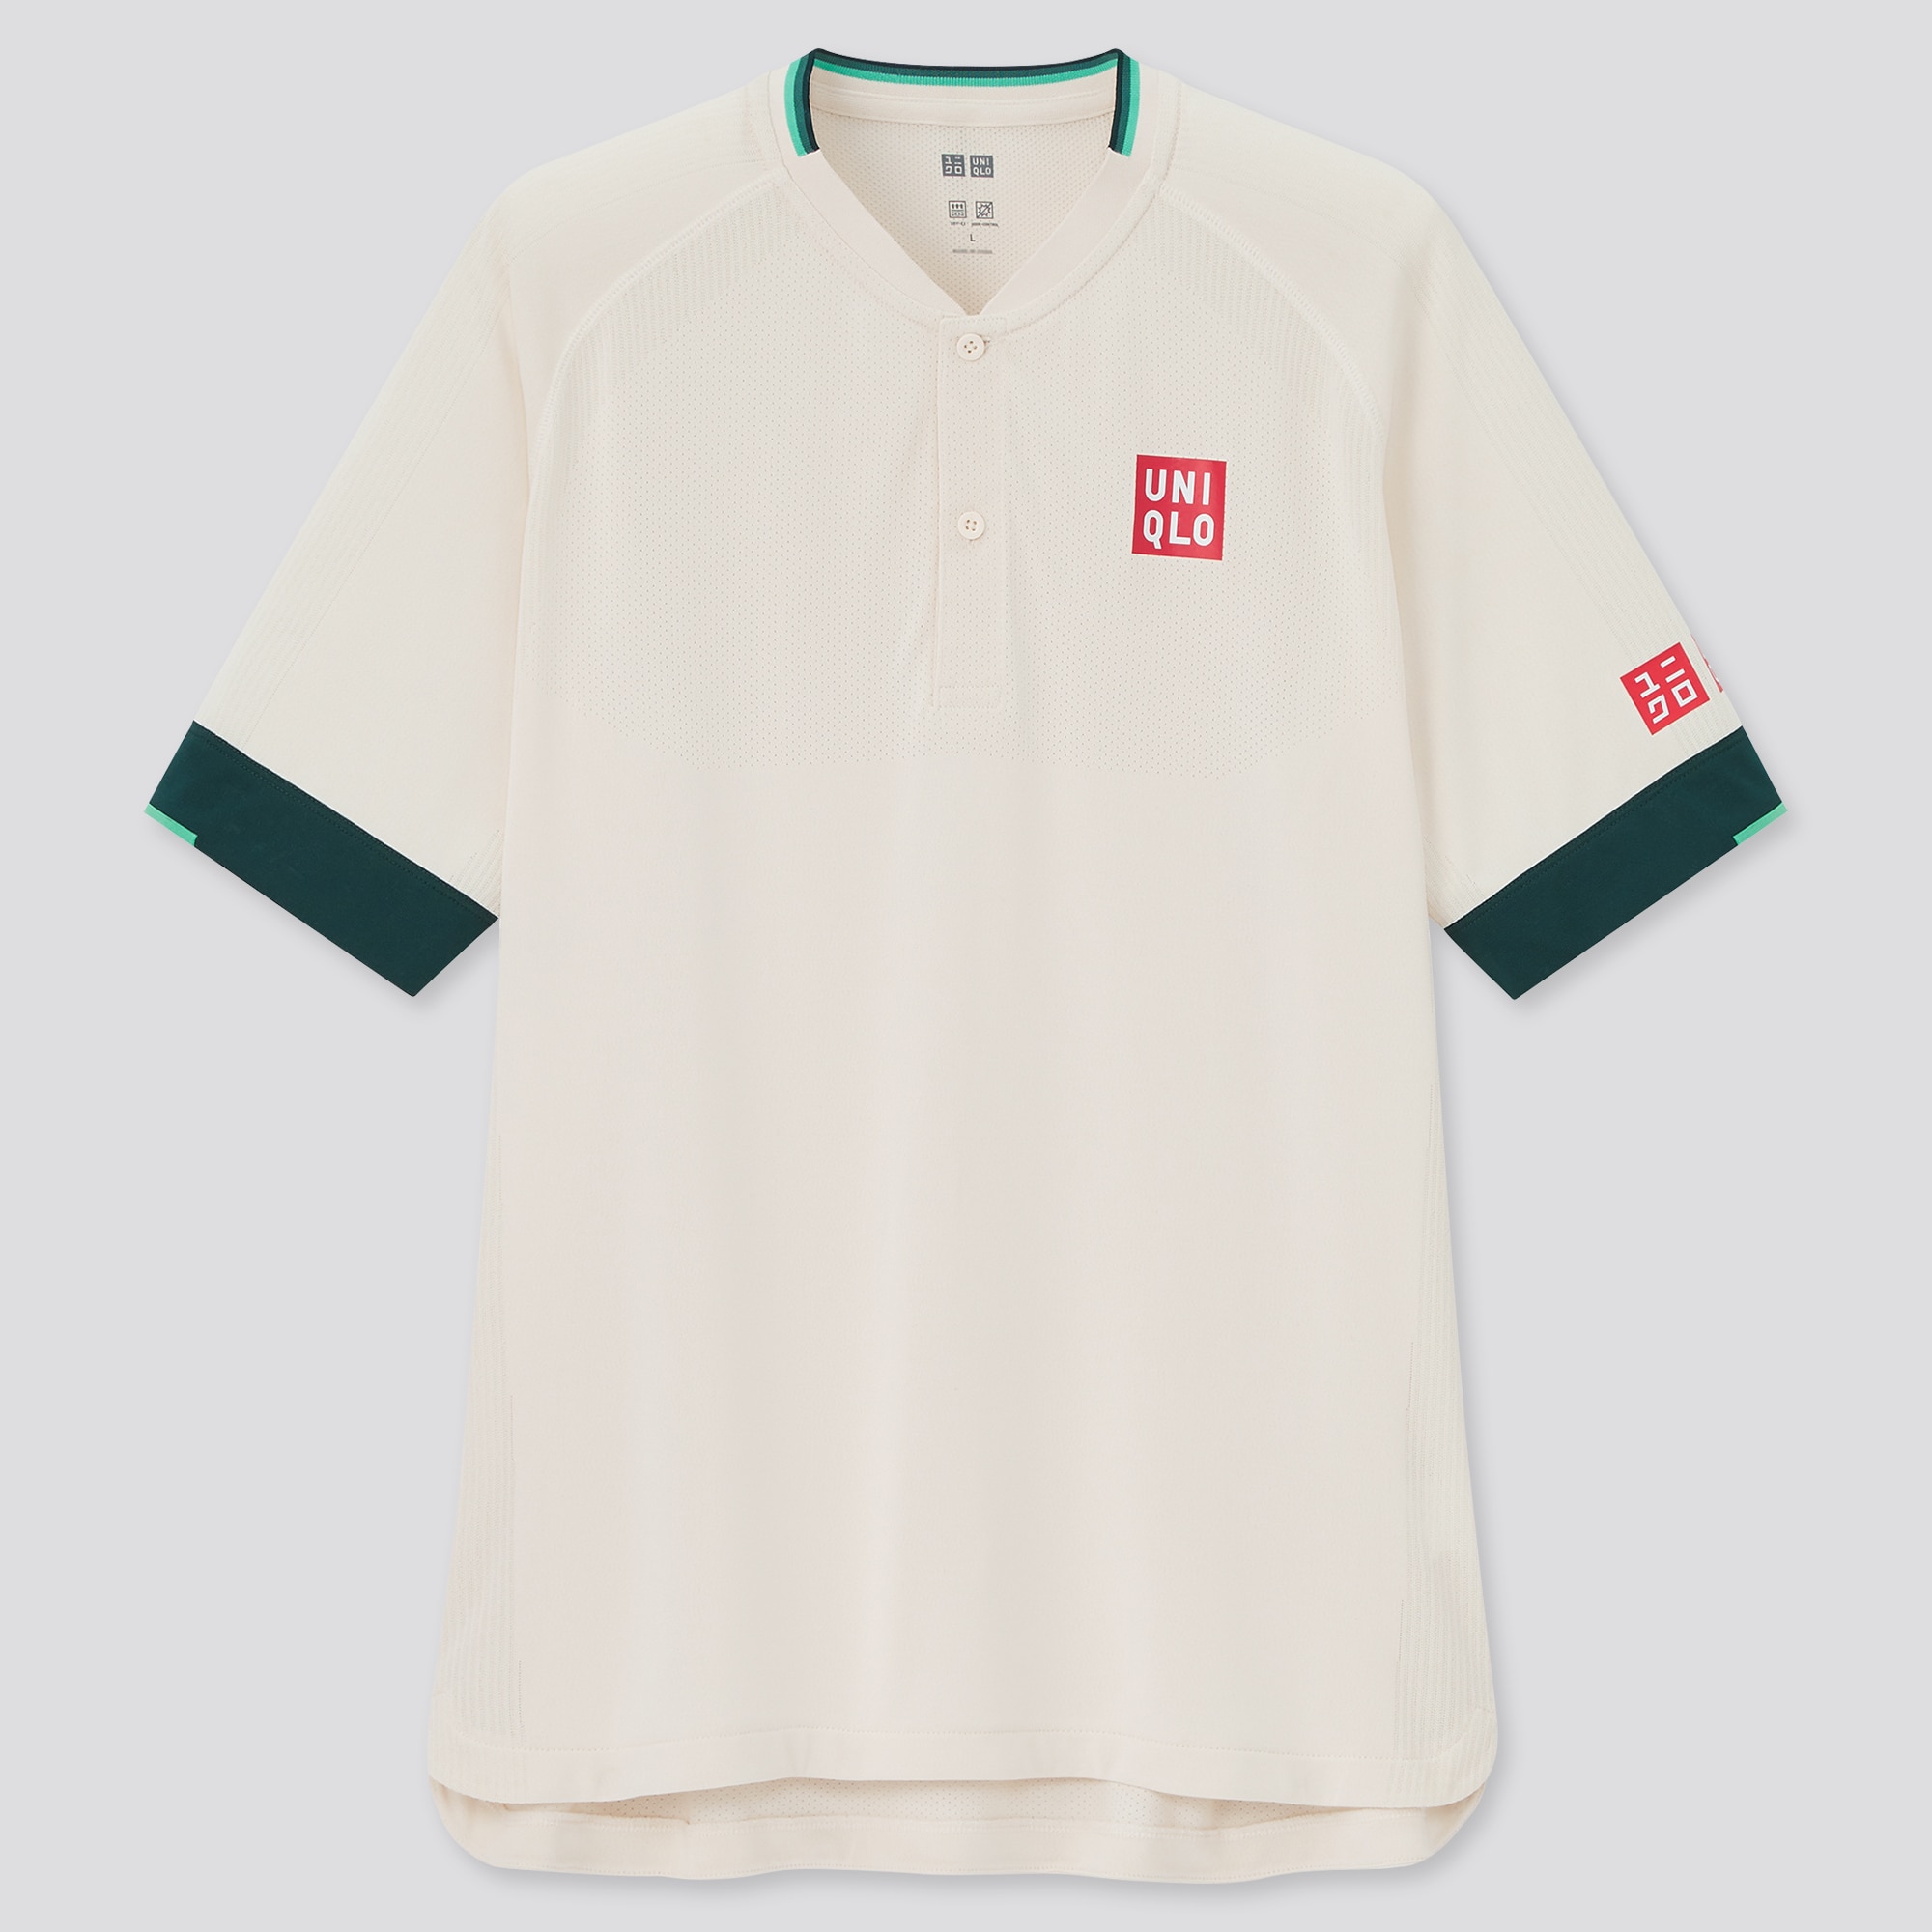 Uniqlo Roger Federer Tokyo Olympics 2021 Red Men’s Tennis Shirt Polo New RF 